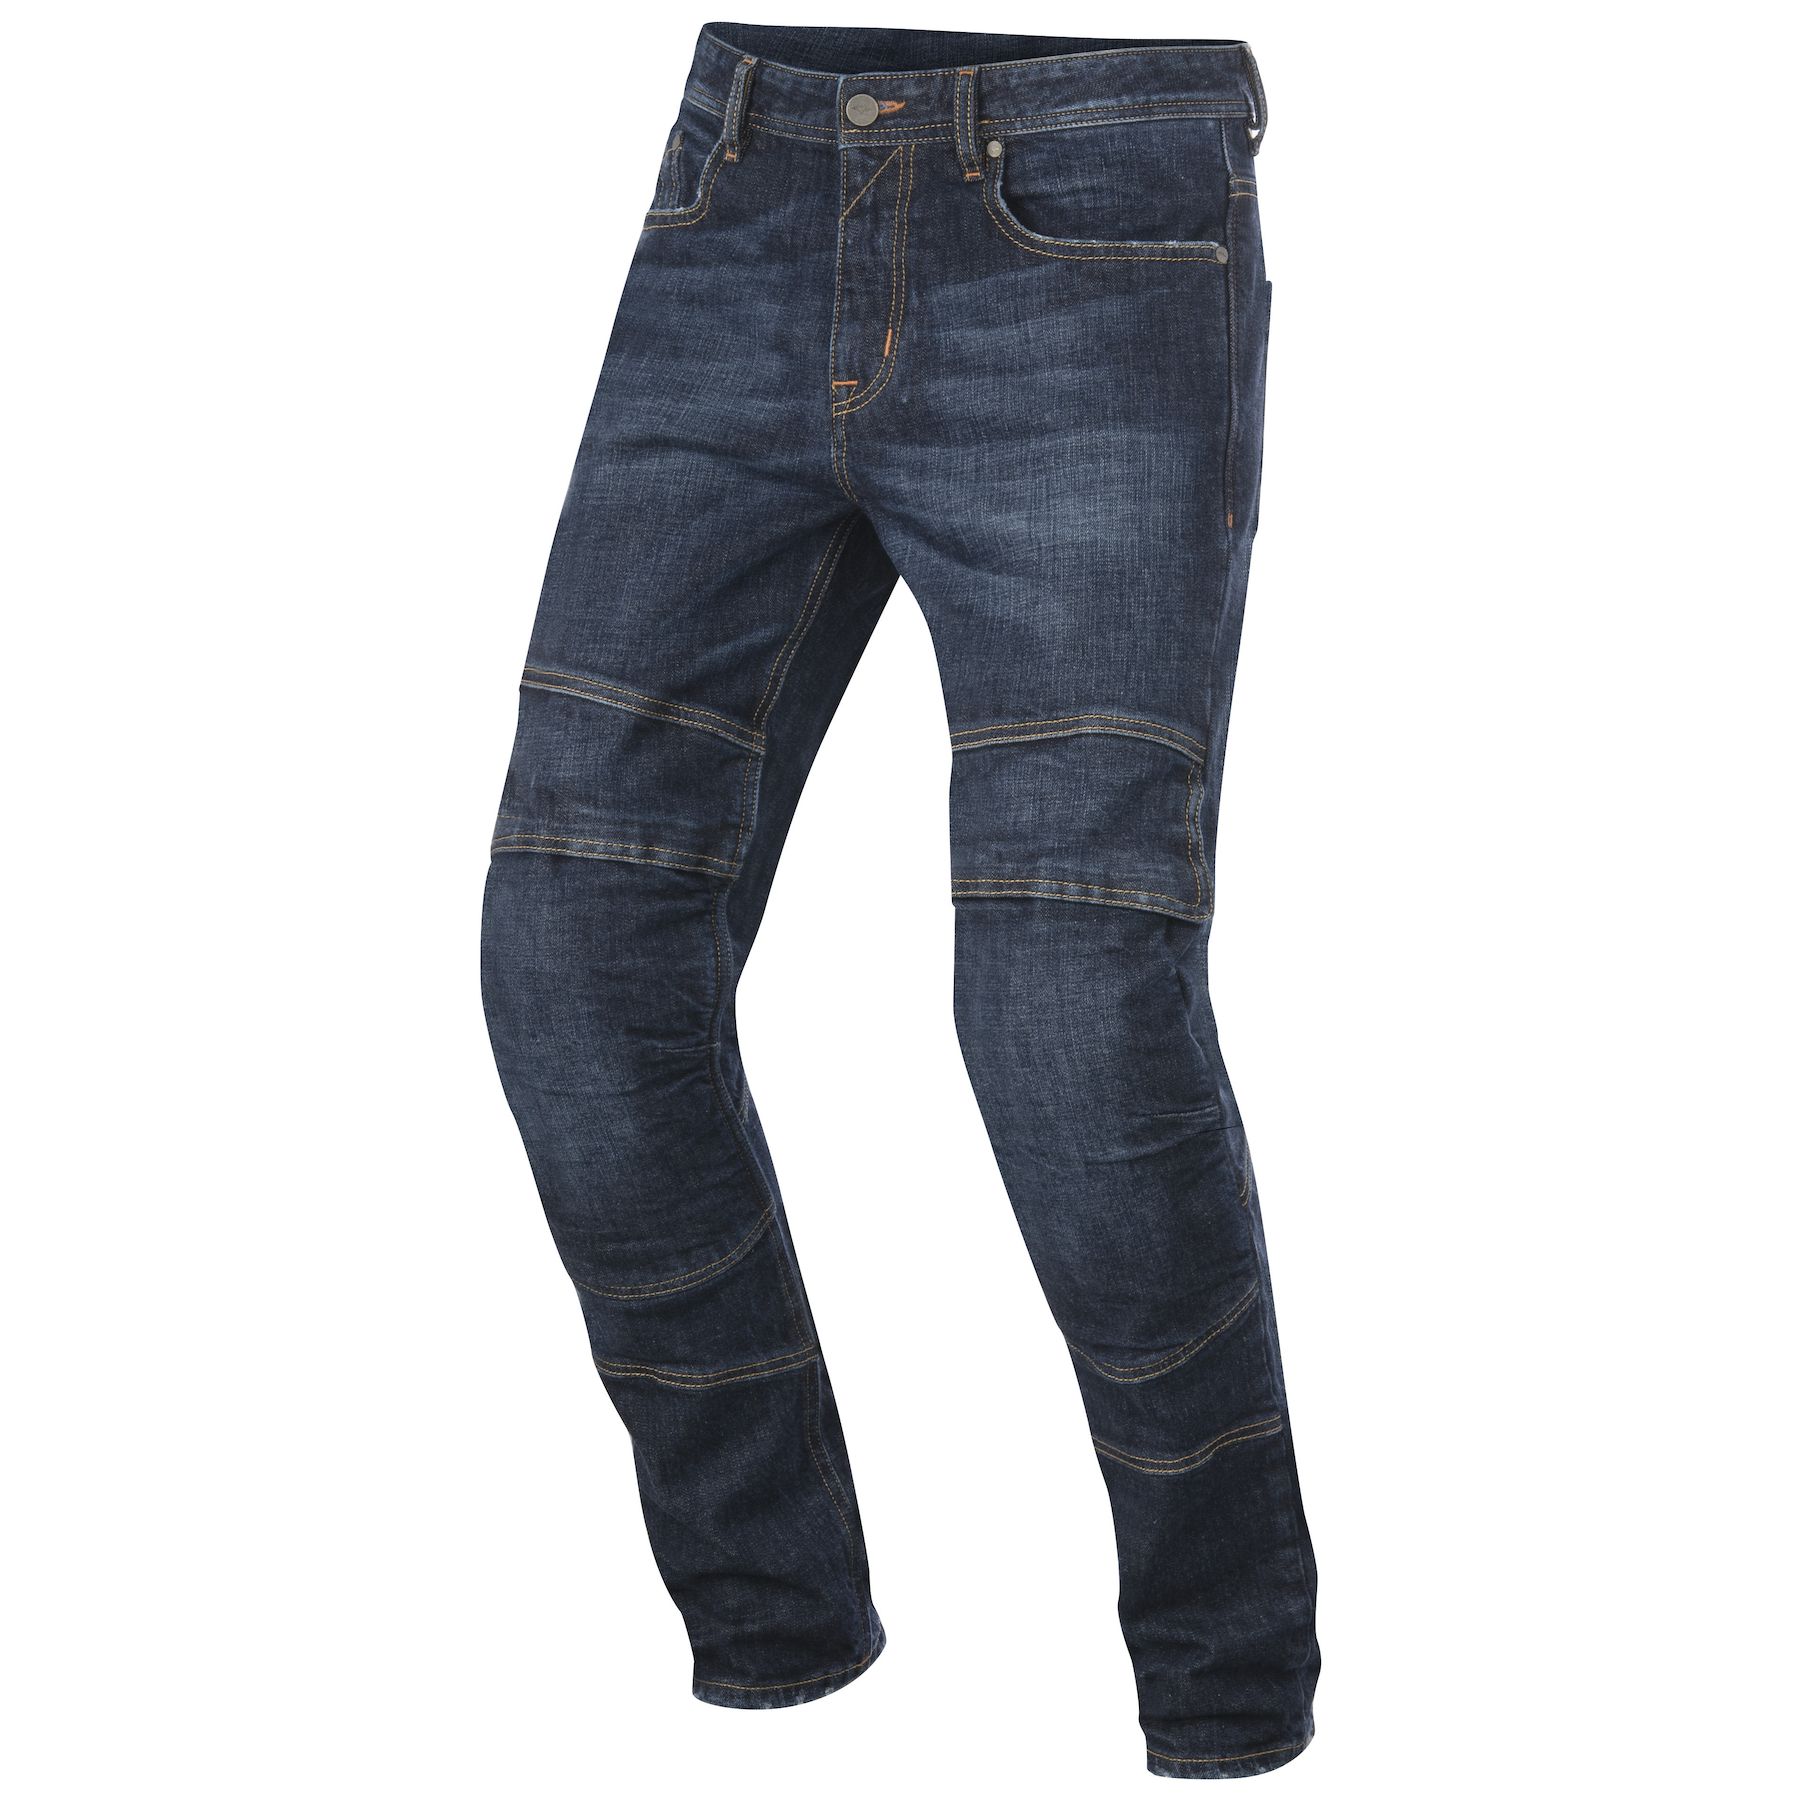 Korda Riding Jeans  Buy Riding Pants Online in India  PowerSports  International